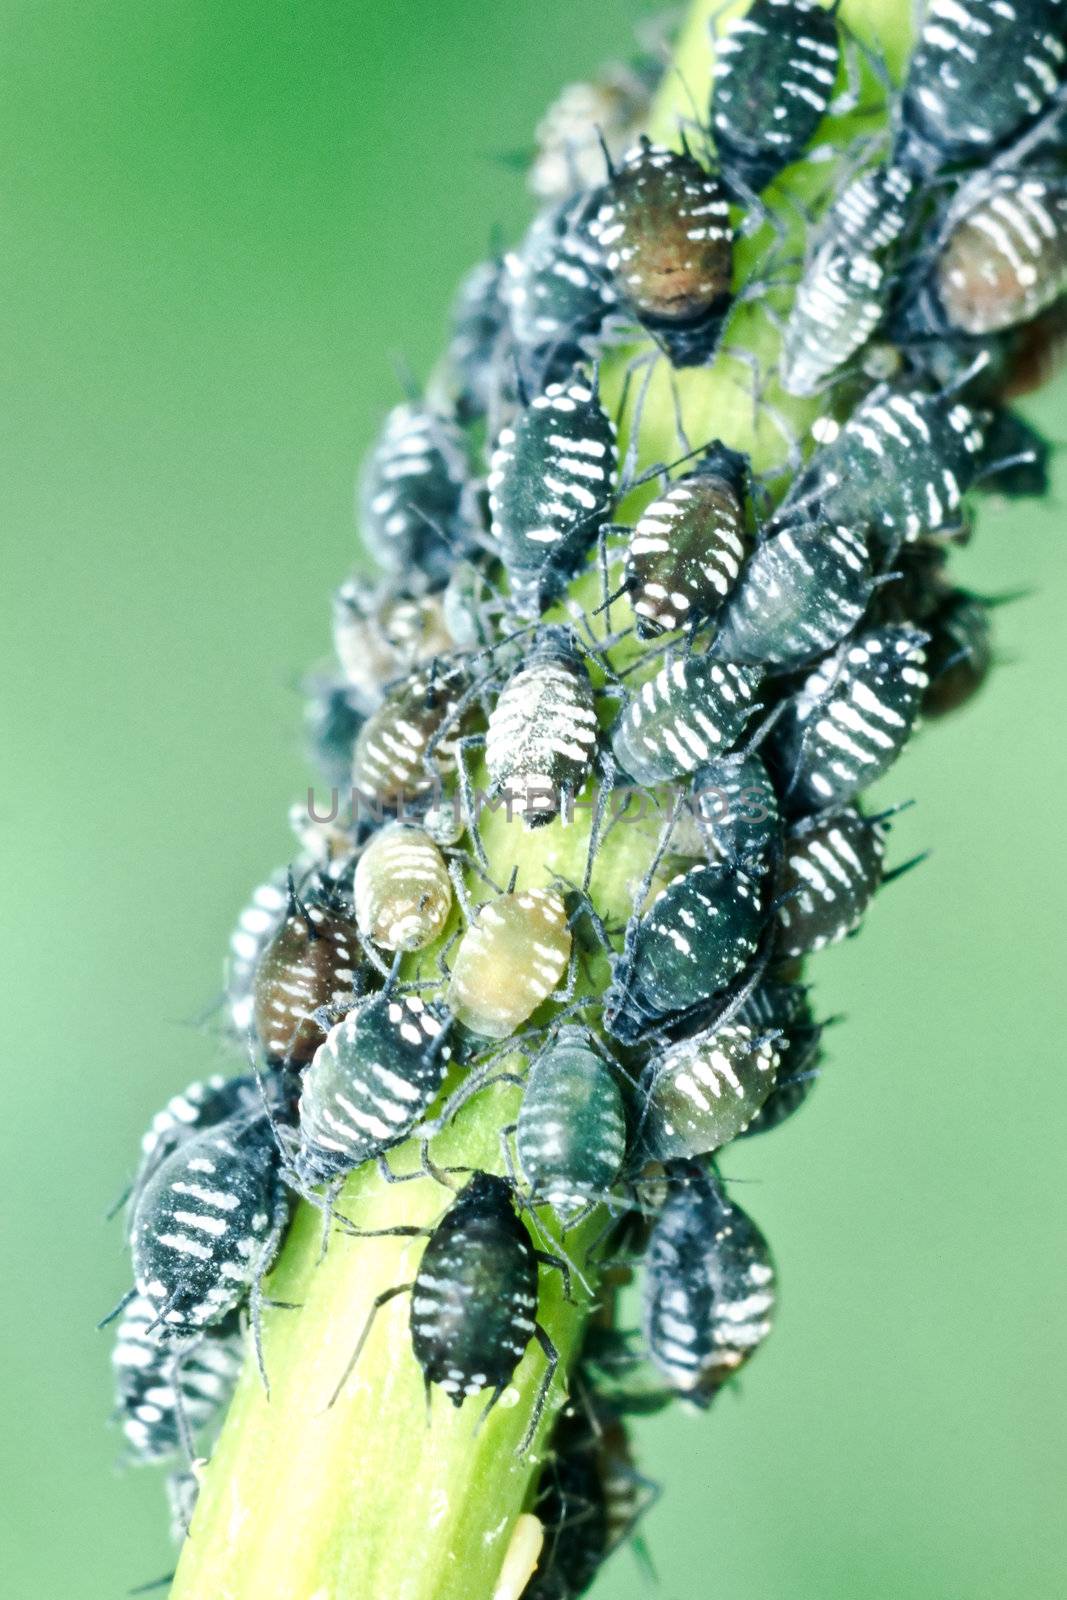 Colony of Elder aphids, Aphis sambuci by PiLens